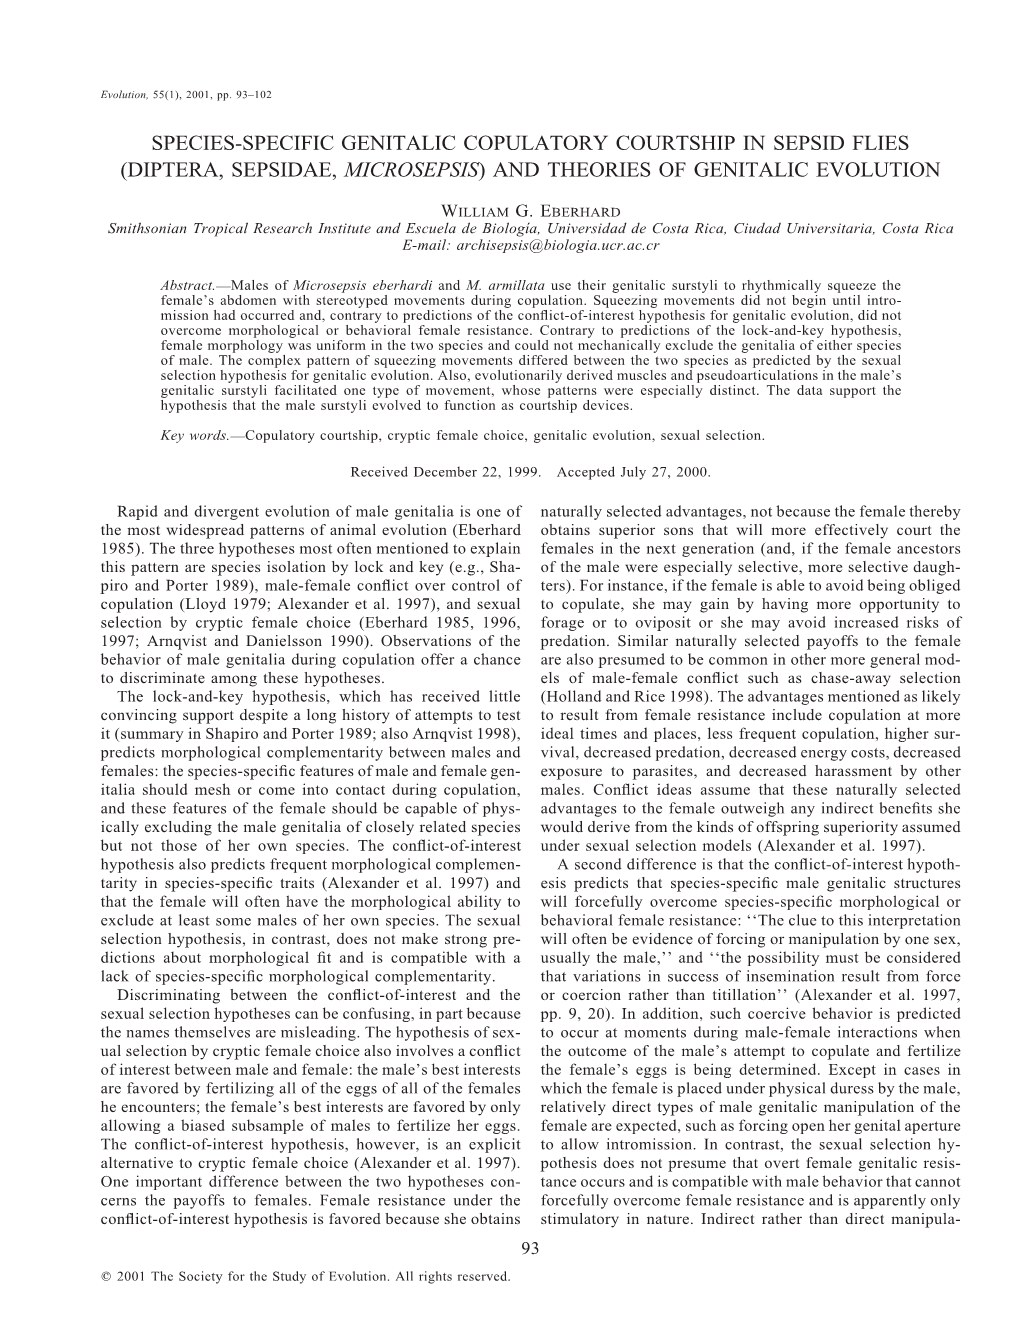 Species-Specific Genitalic Copulatory Courtship in Sepsid Flies (Diptera, Sepsidae, Microsepsis) and Theories of Genitalic Evolution